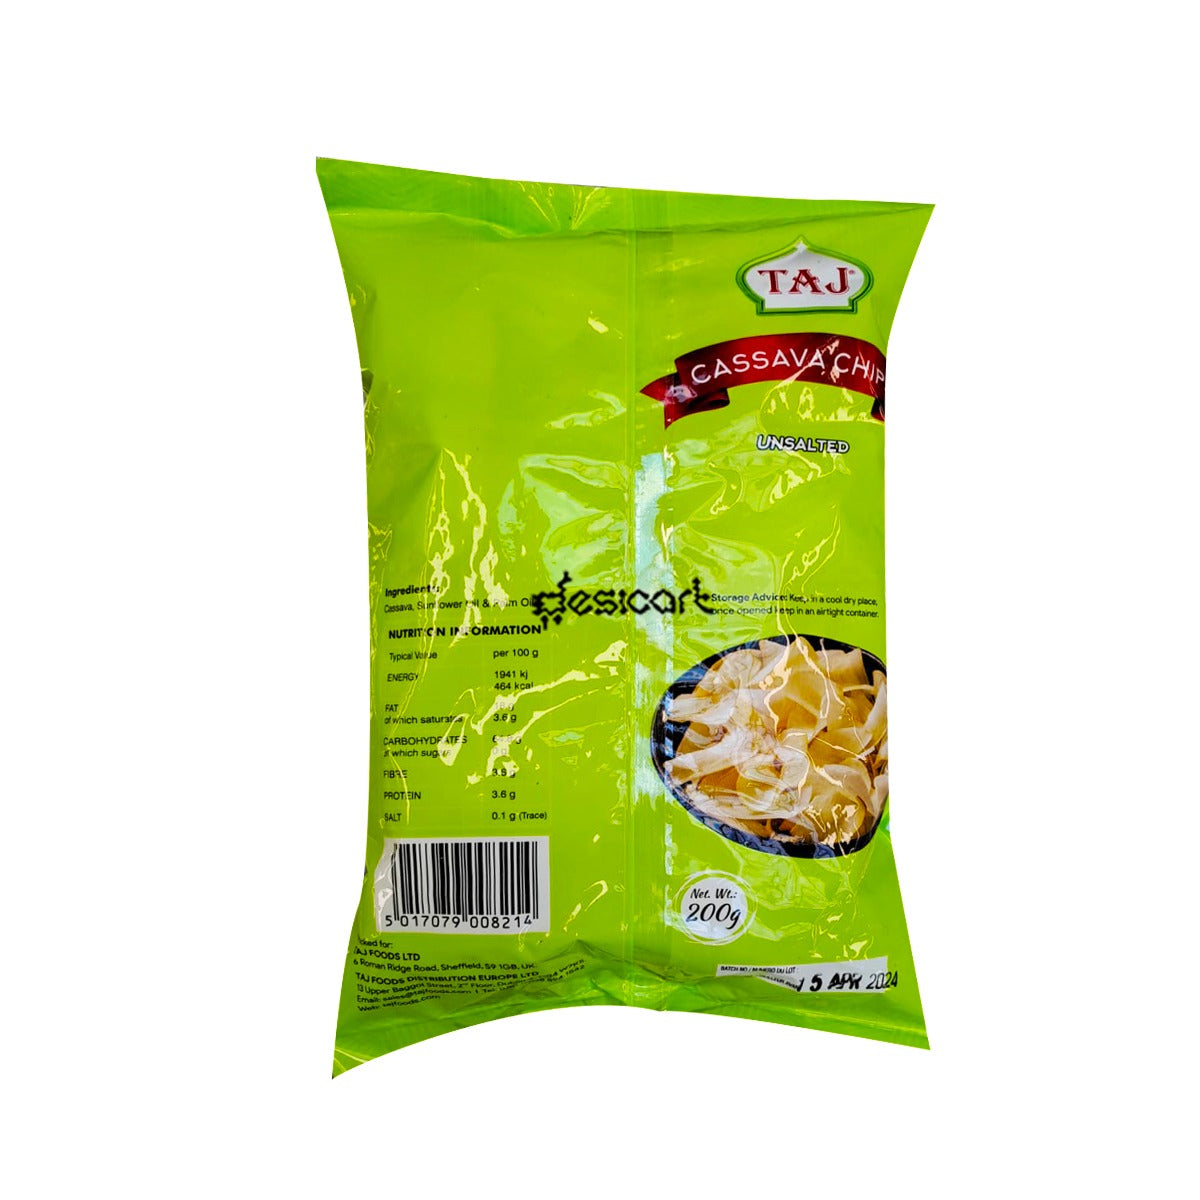 Taj Cassava Chips Unsalted 200g